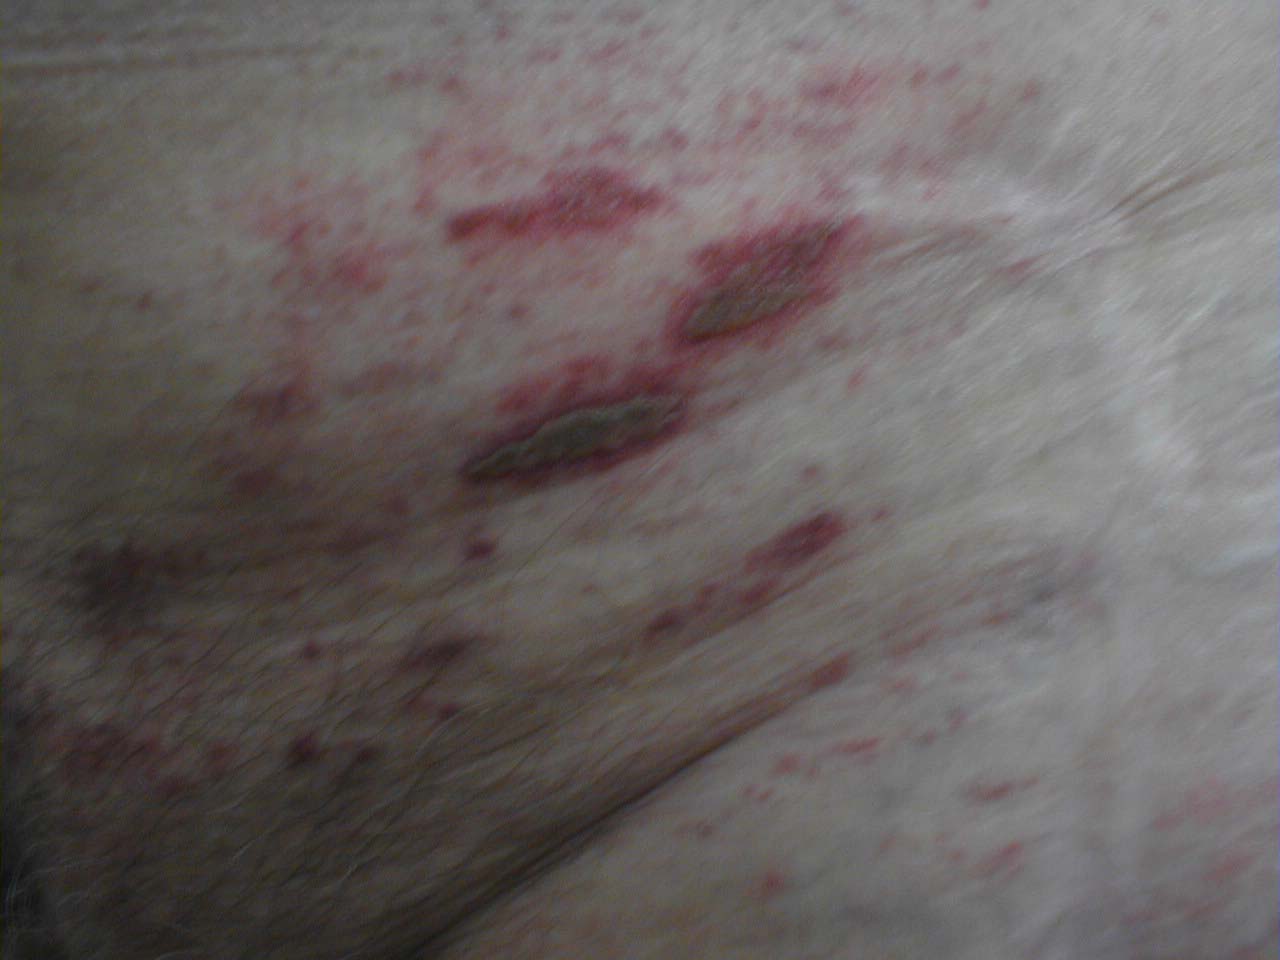 File:Skin zoster buttocks1.jpg